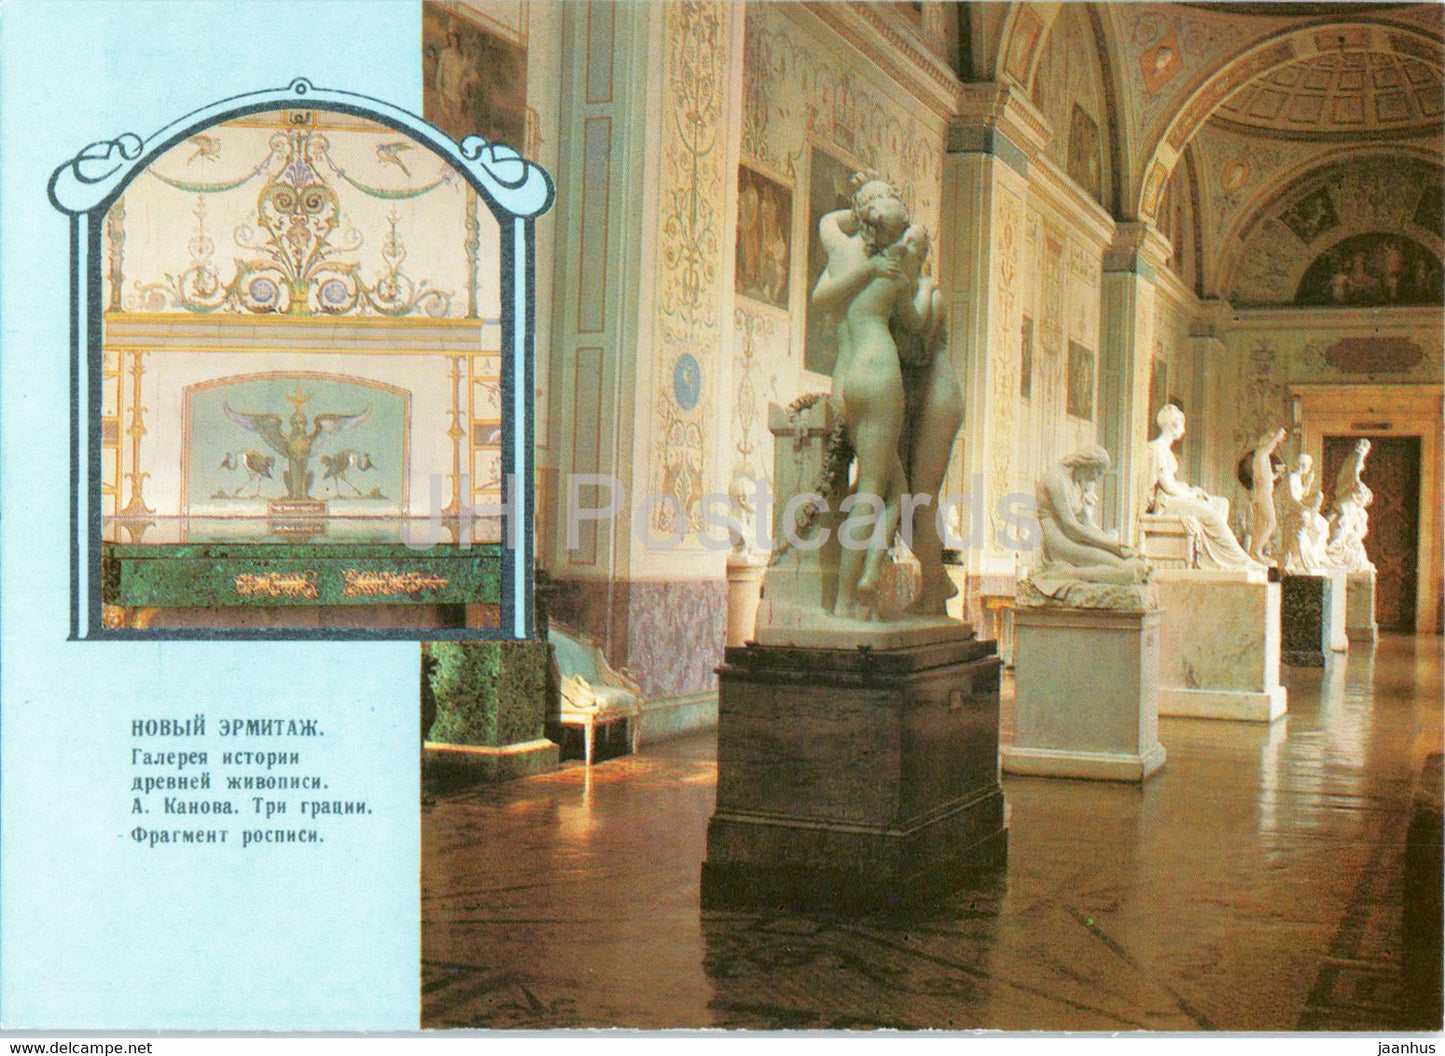 Leningrad - St Petersburg - State Hermitage - Ancient Art Gallery - postal stationery - 1989 - Russia USSR - unused - JH Postcards